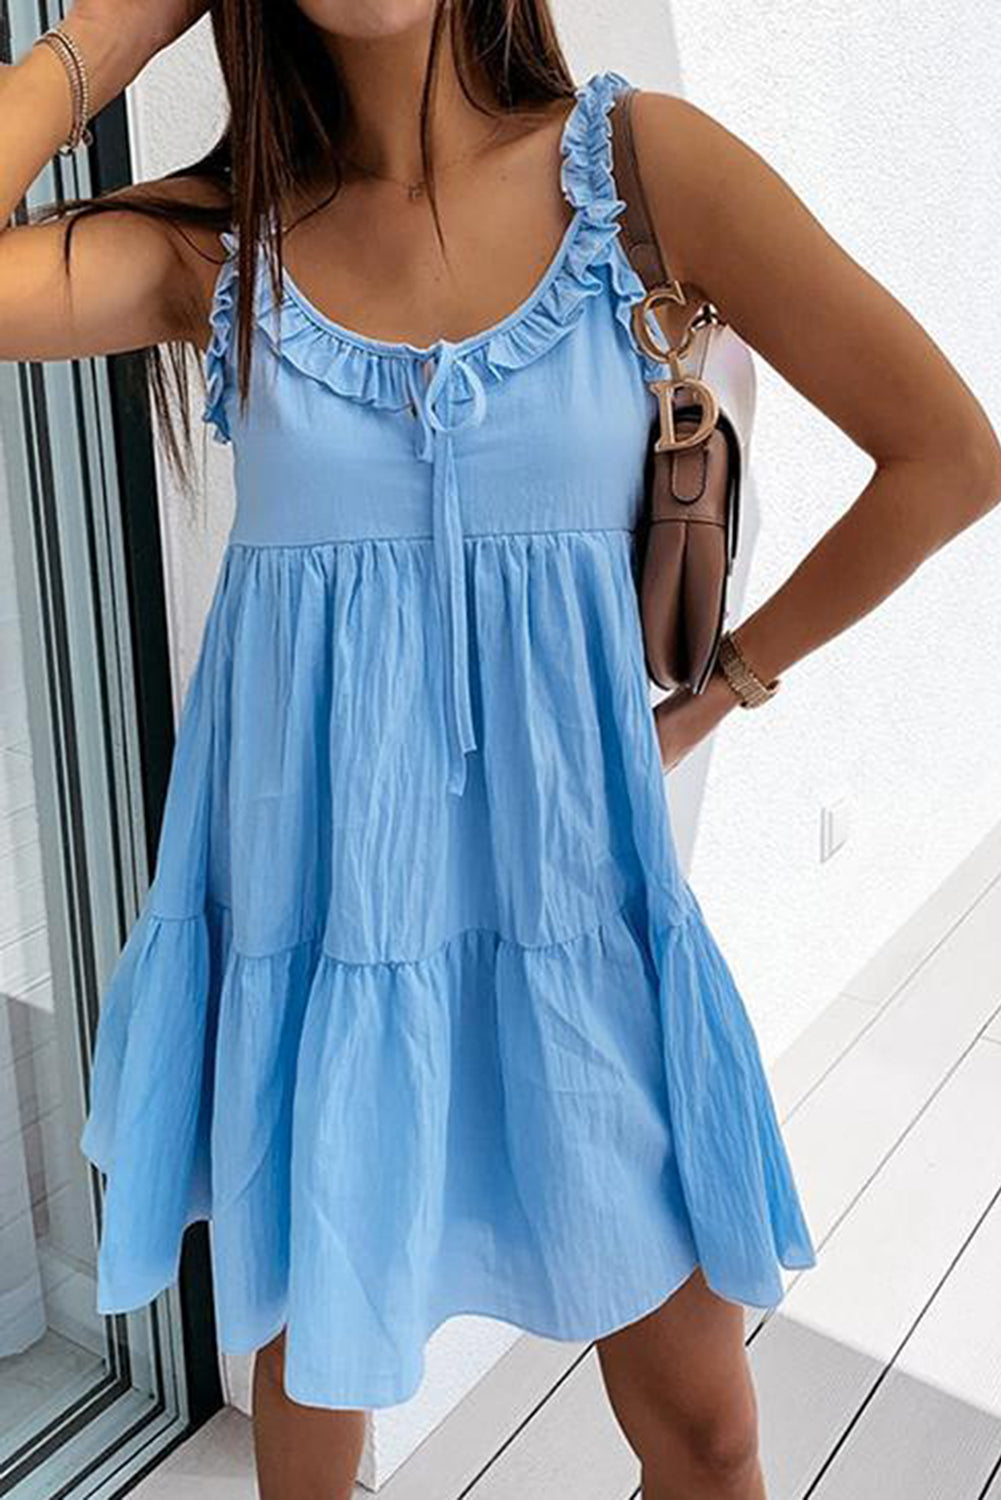 Sky Blue Sleeveless Solid Ruffle Slip Mini Dress for Women LC2211357-4